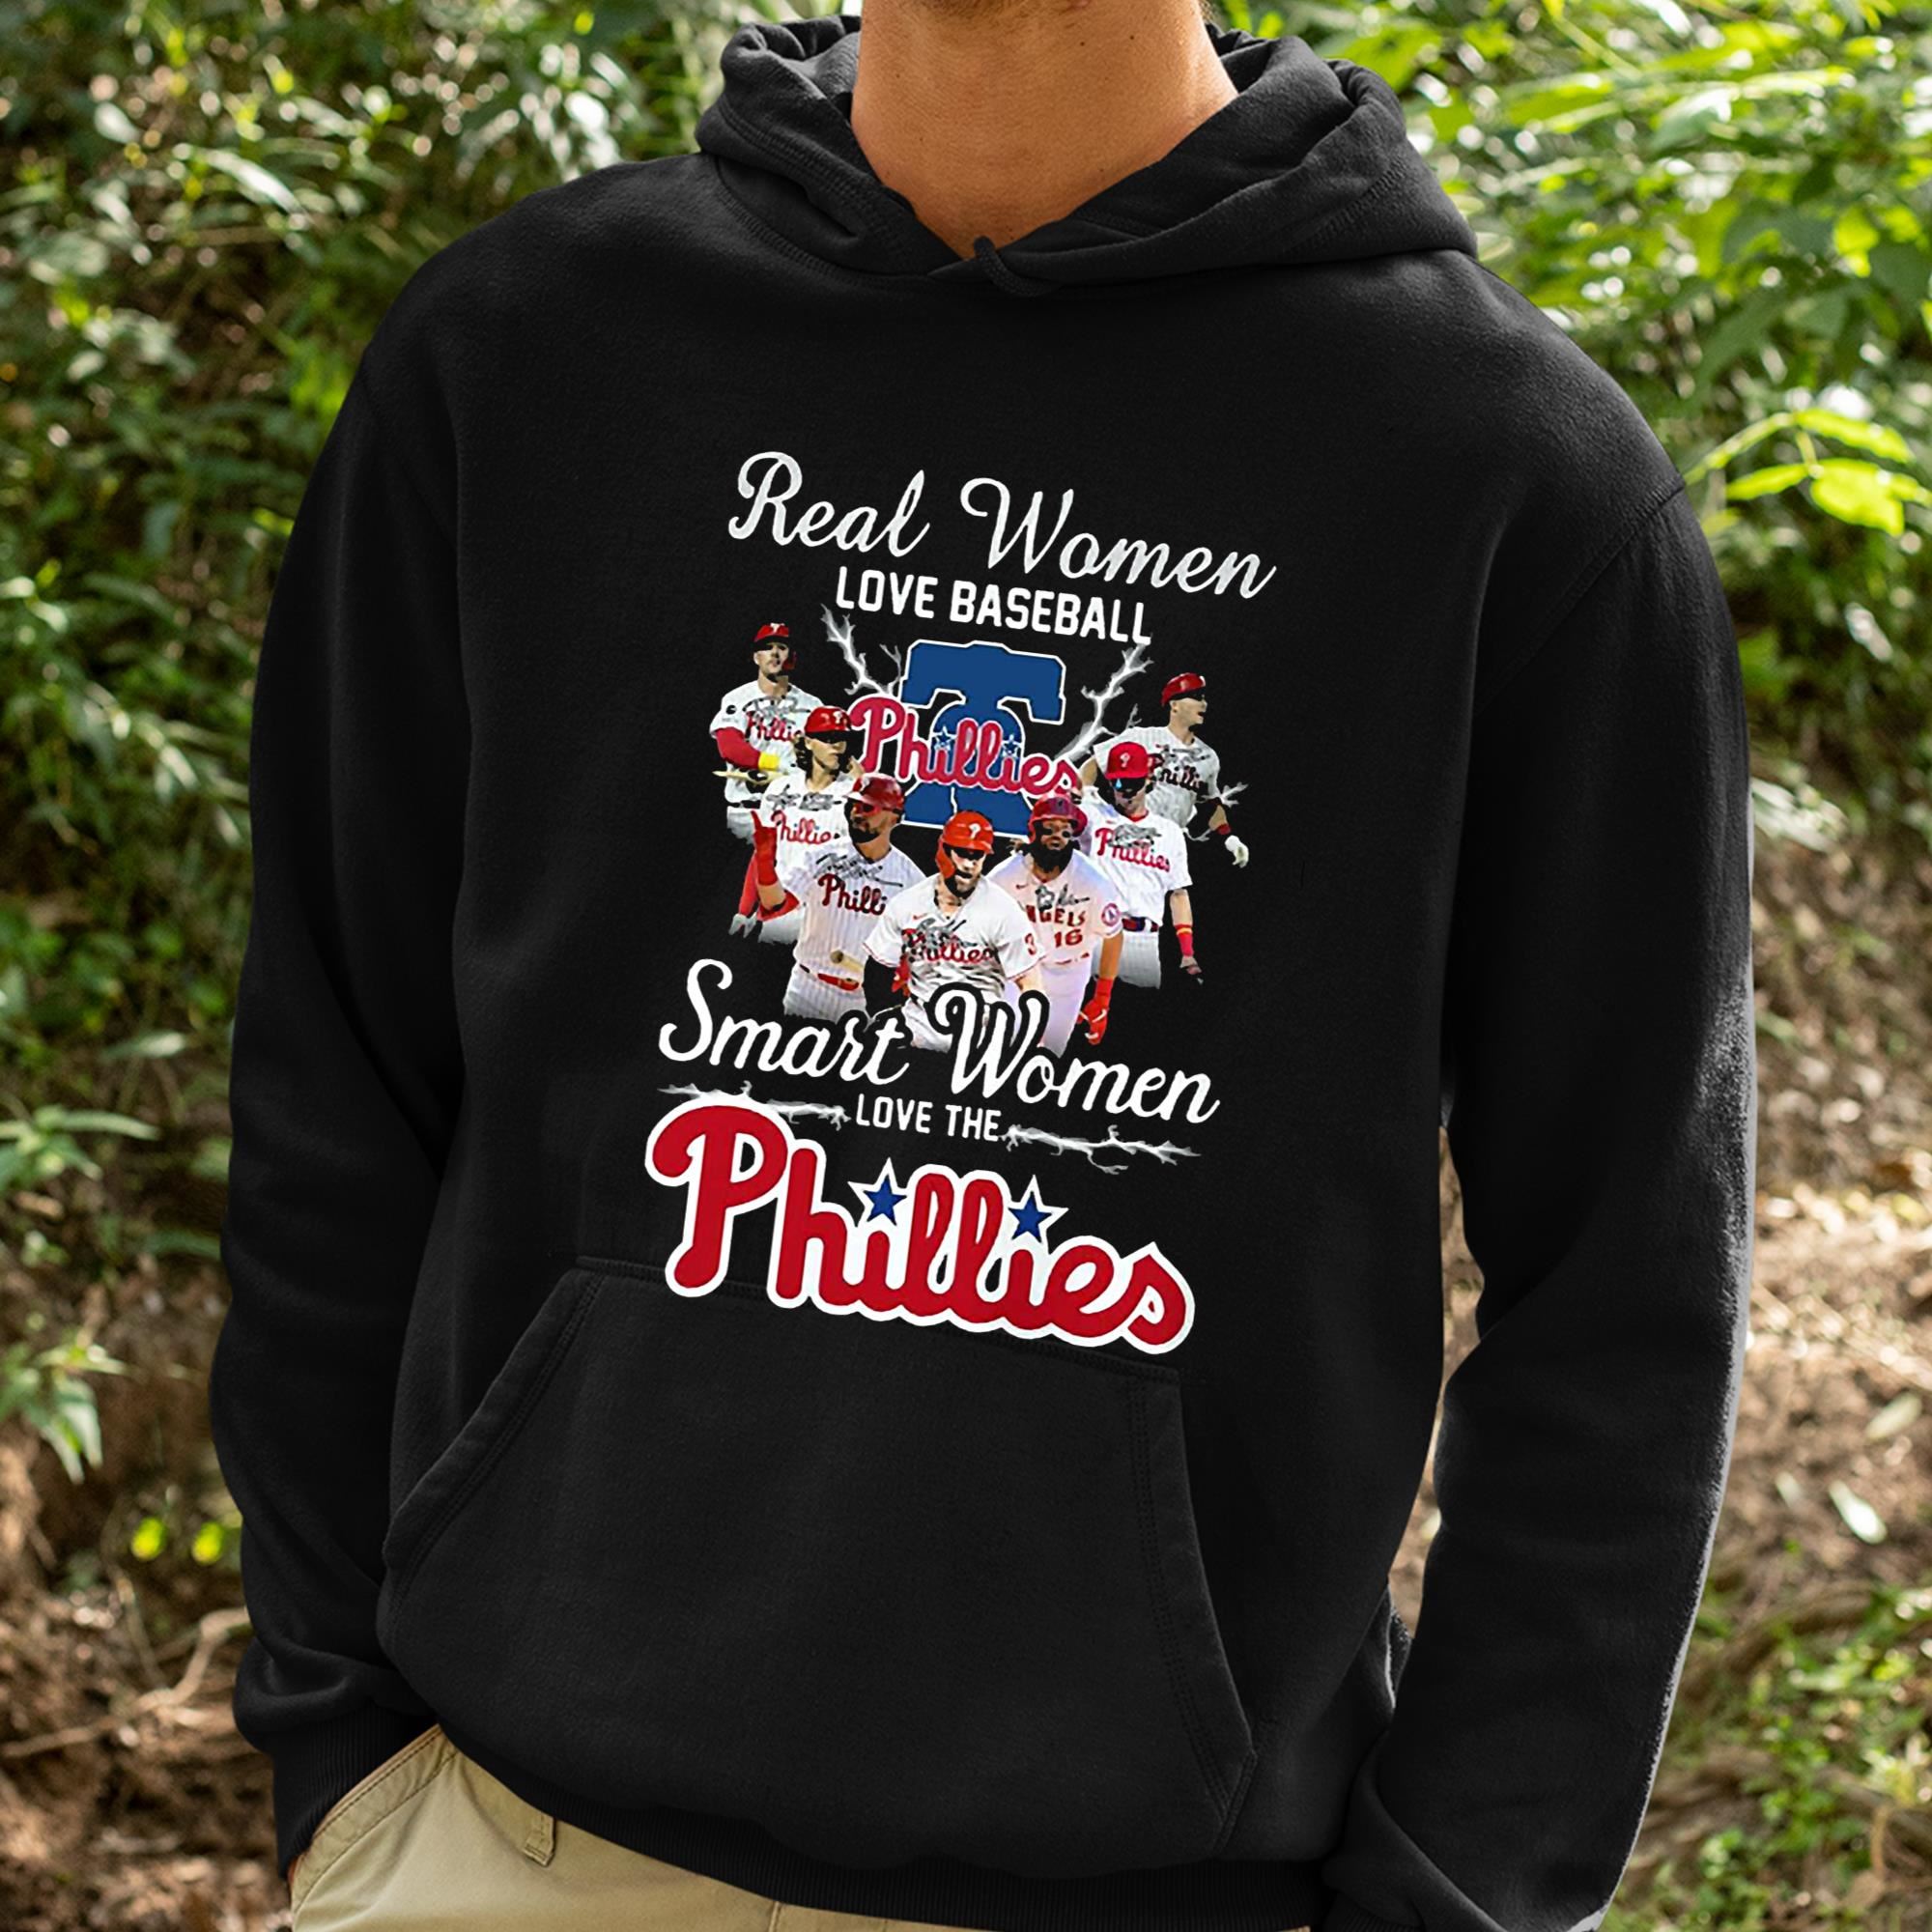 2023 NLCS Philadelphia Phillies Clinched Shirt - Zerelam